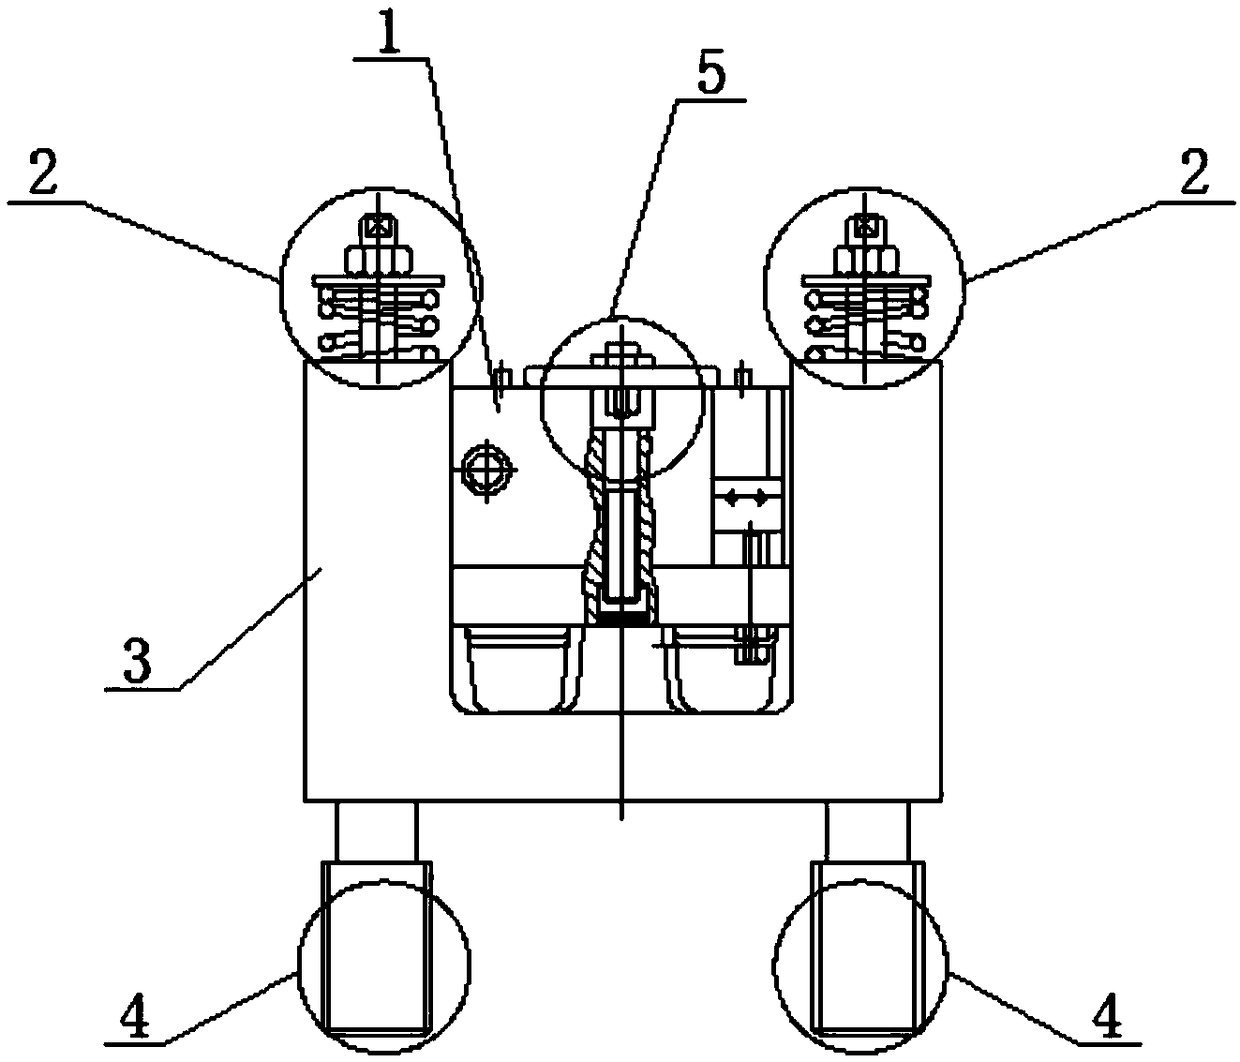 A sliding floating caliper braking mechanism